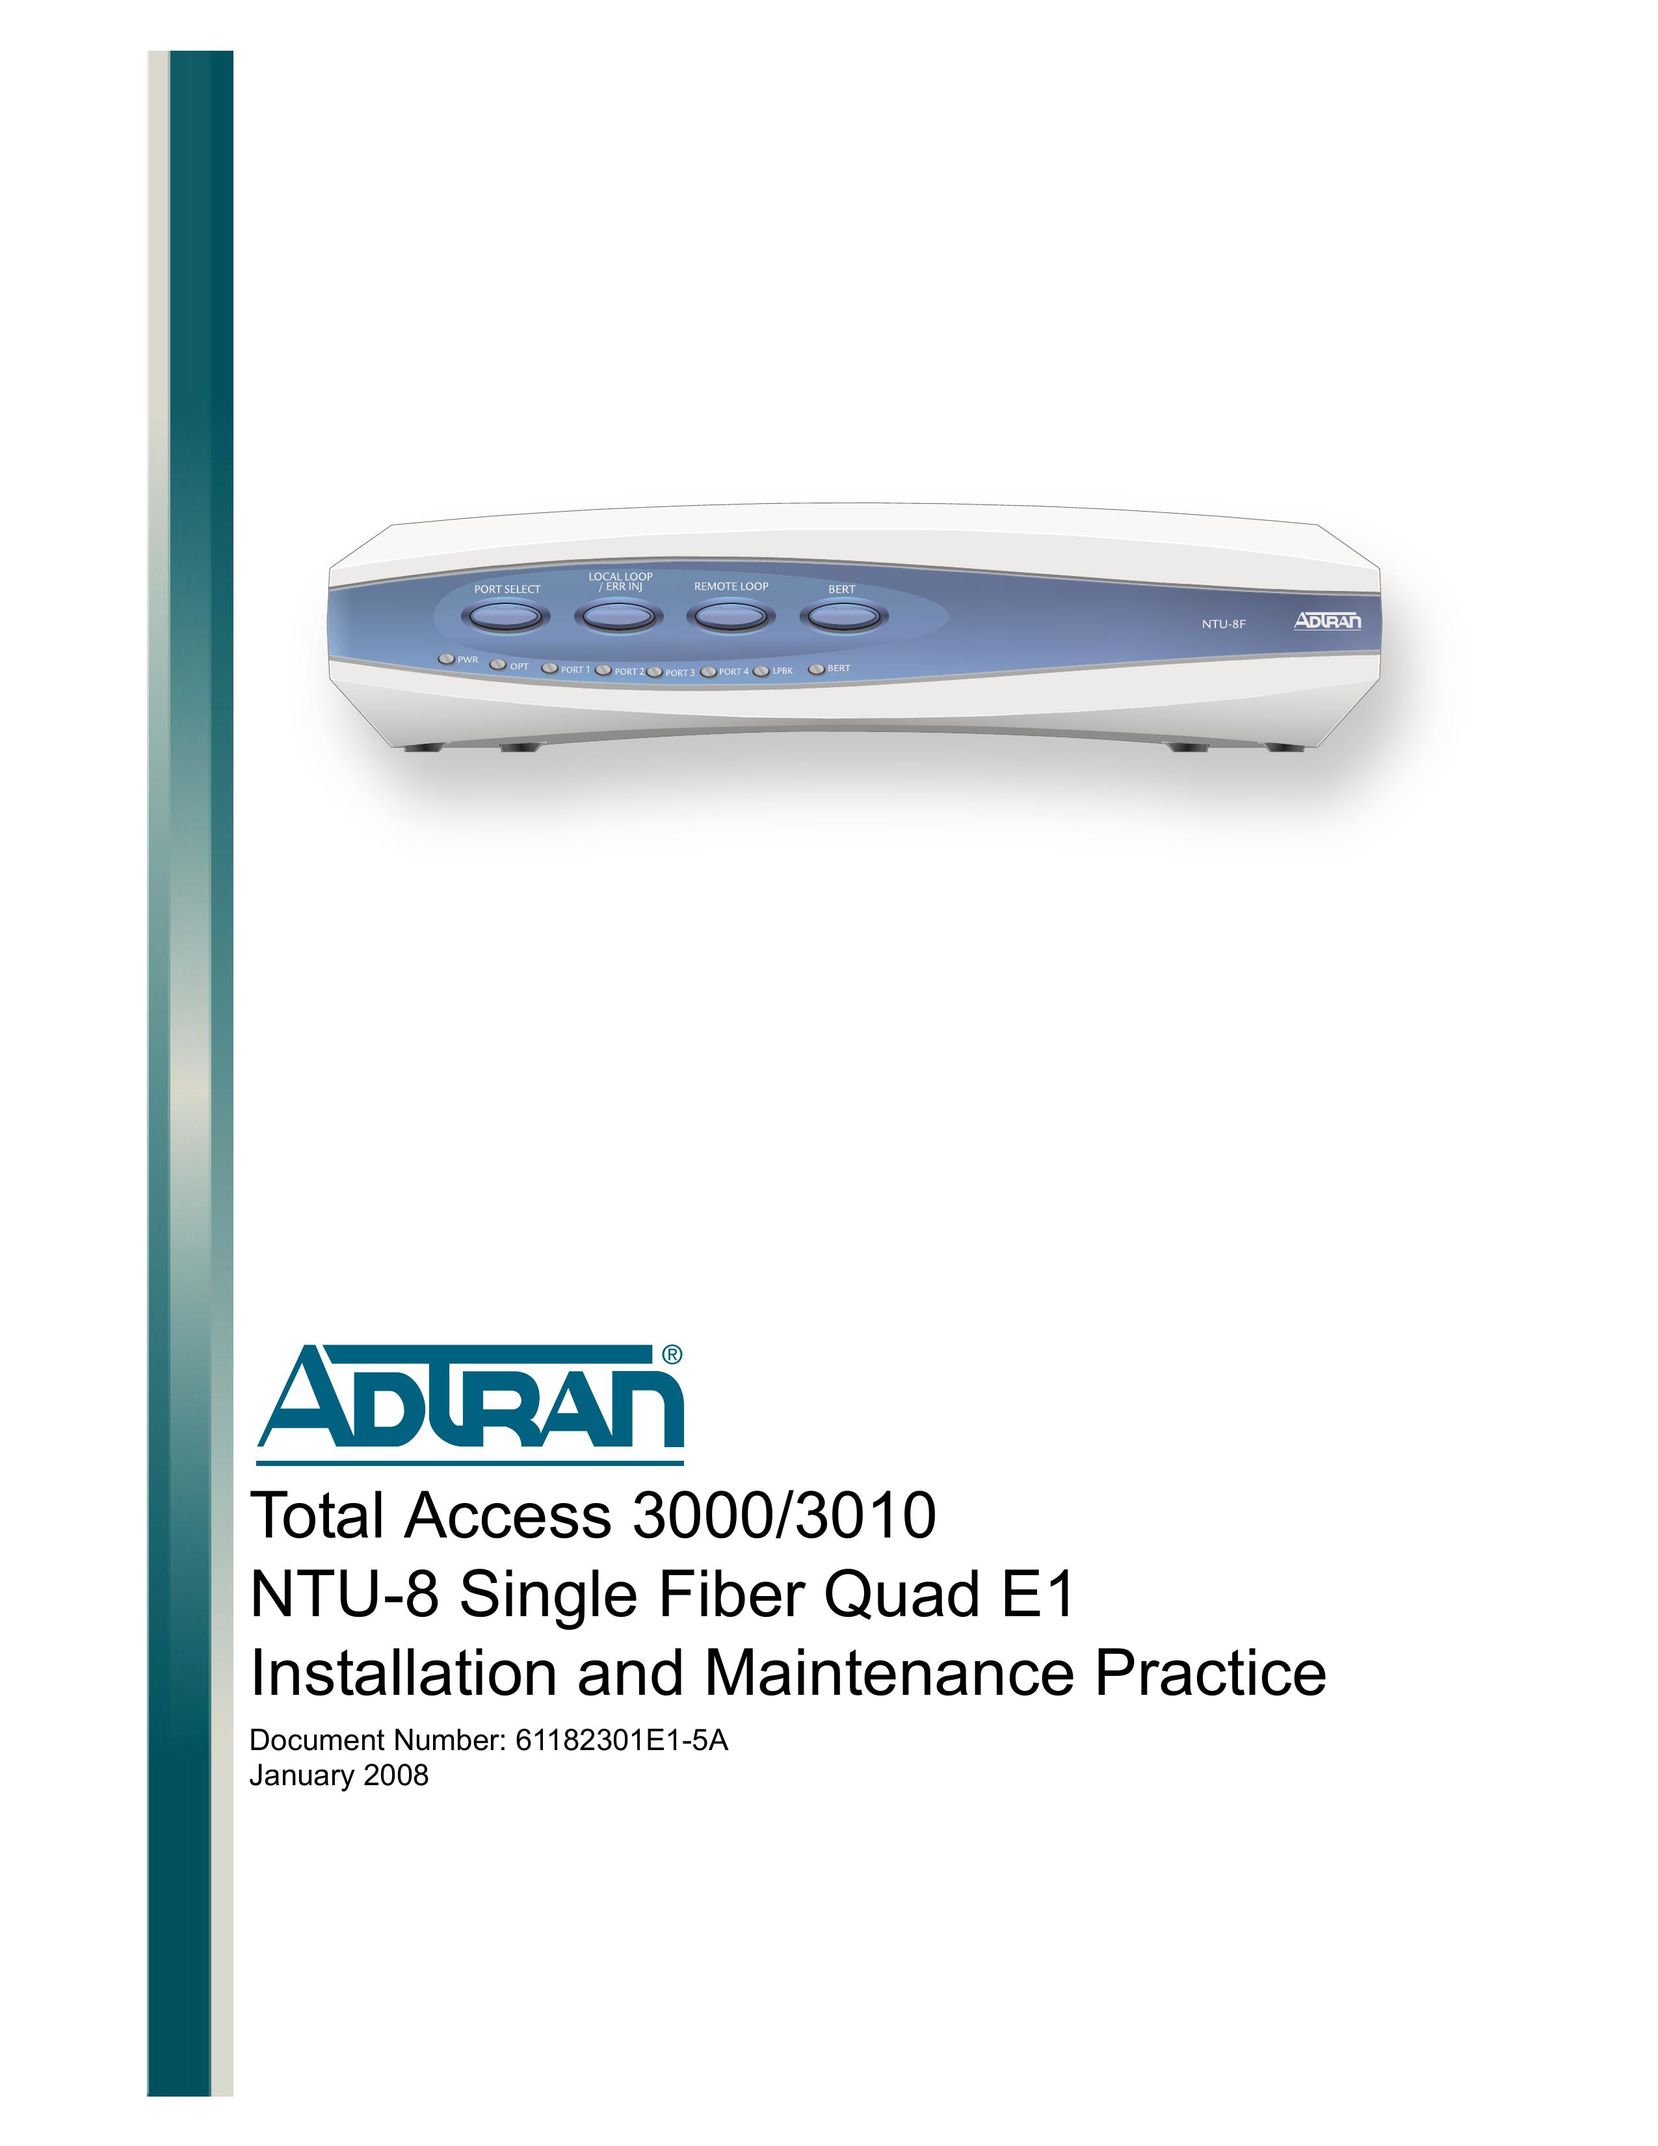 ADTRAN 3000 NTU-8 Network Card User Manual